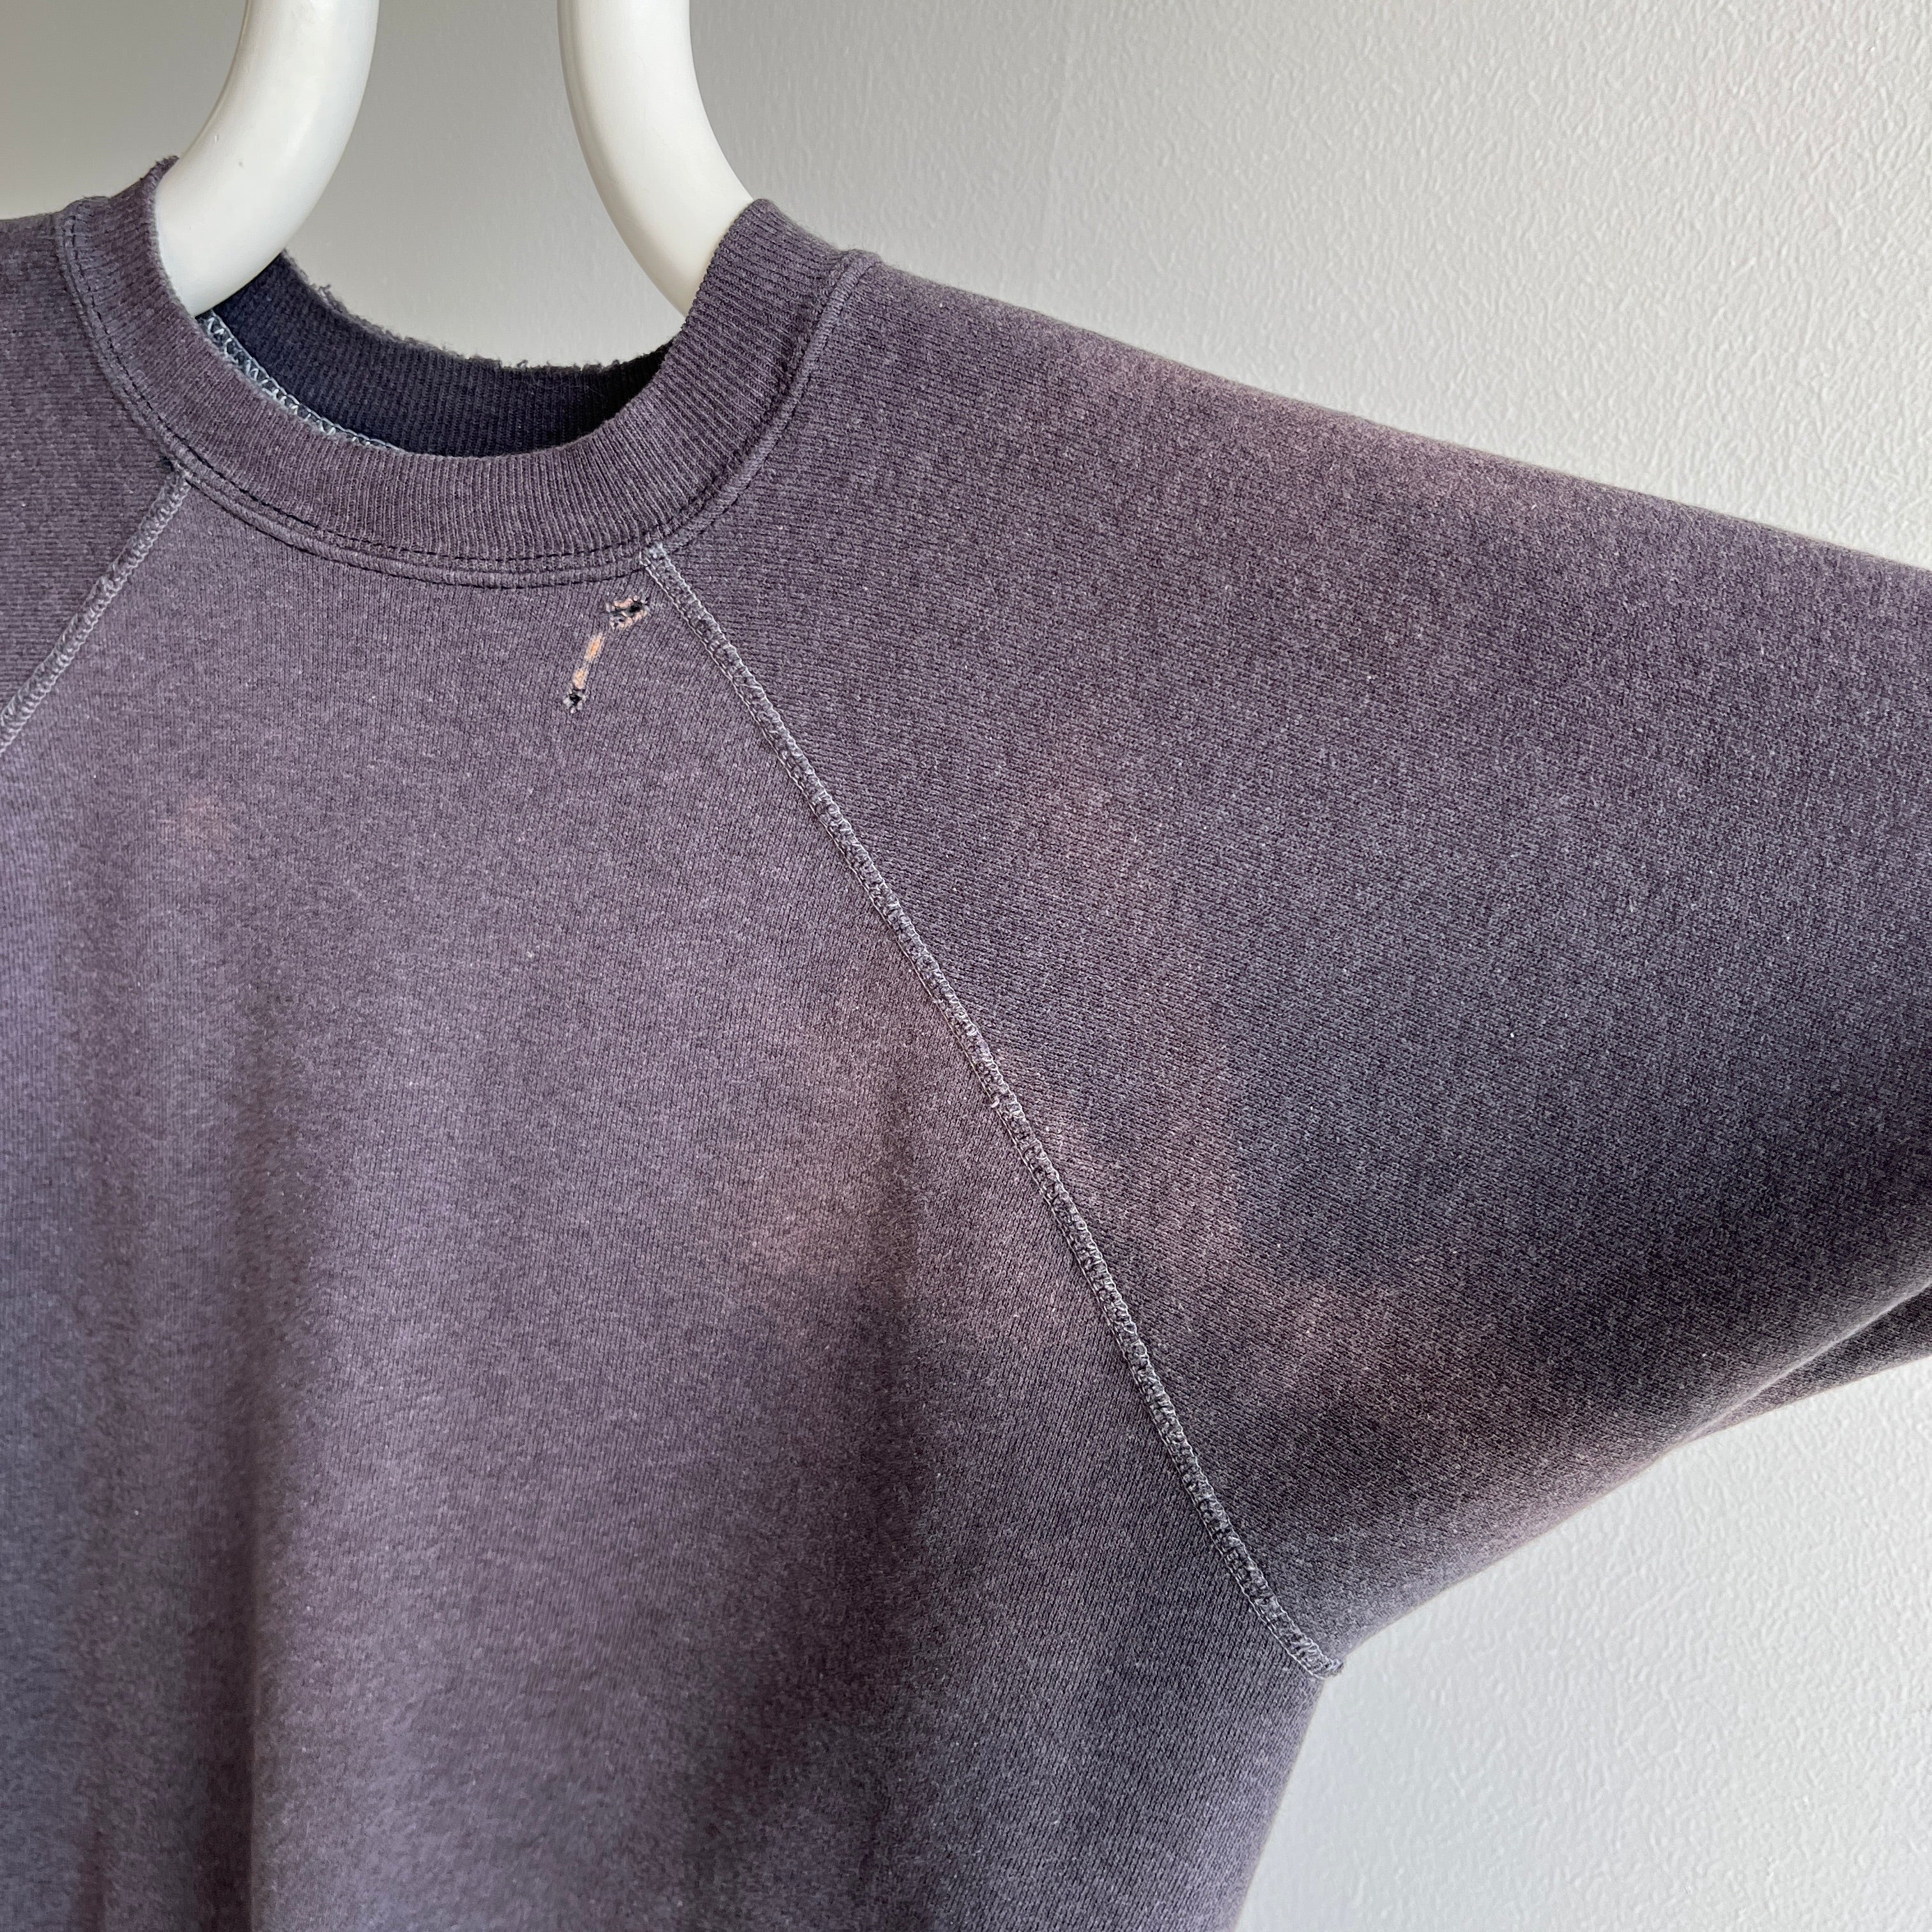 1970s Sun Faded and Tattered Collar Navy/Black/Purple Super Soft Warm Up Sweatshirt